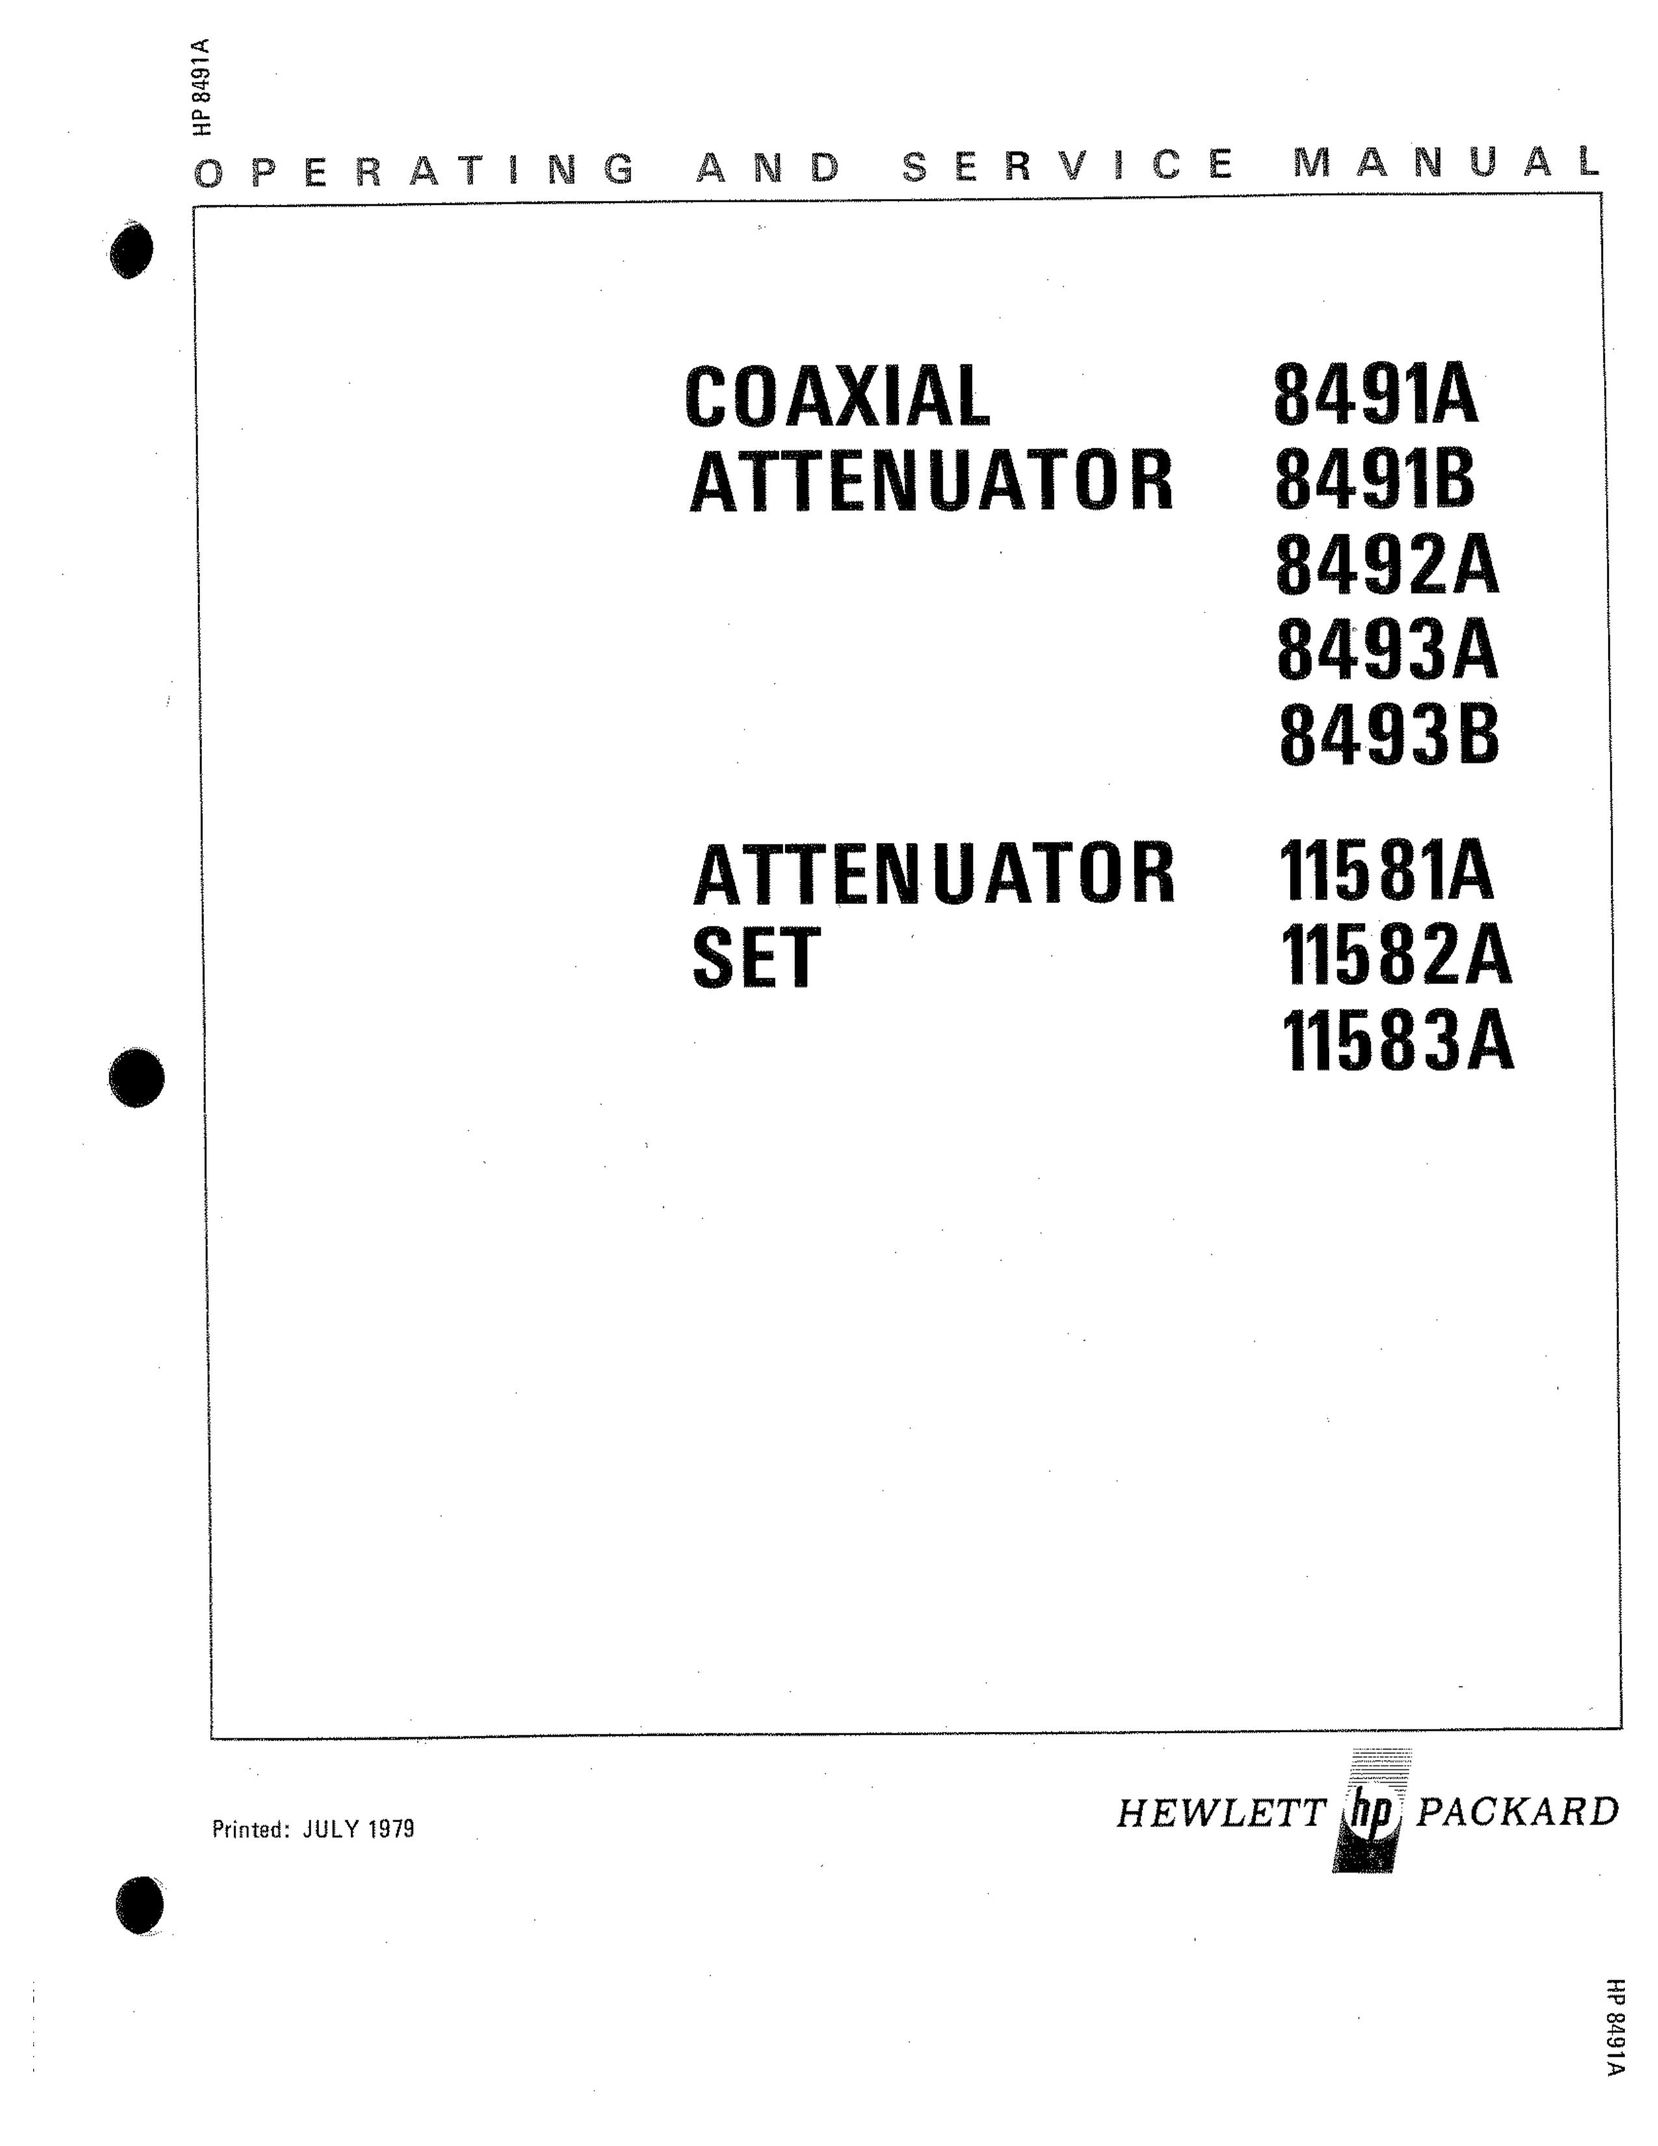 HP (Hewlett-Packard) 8493A TV Cables User Manual